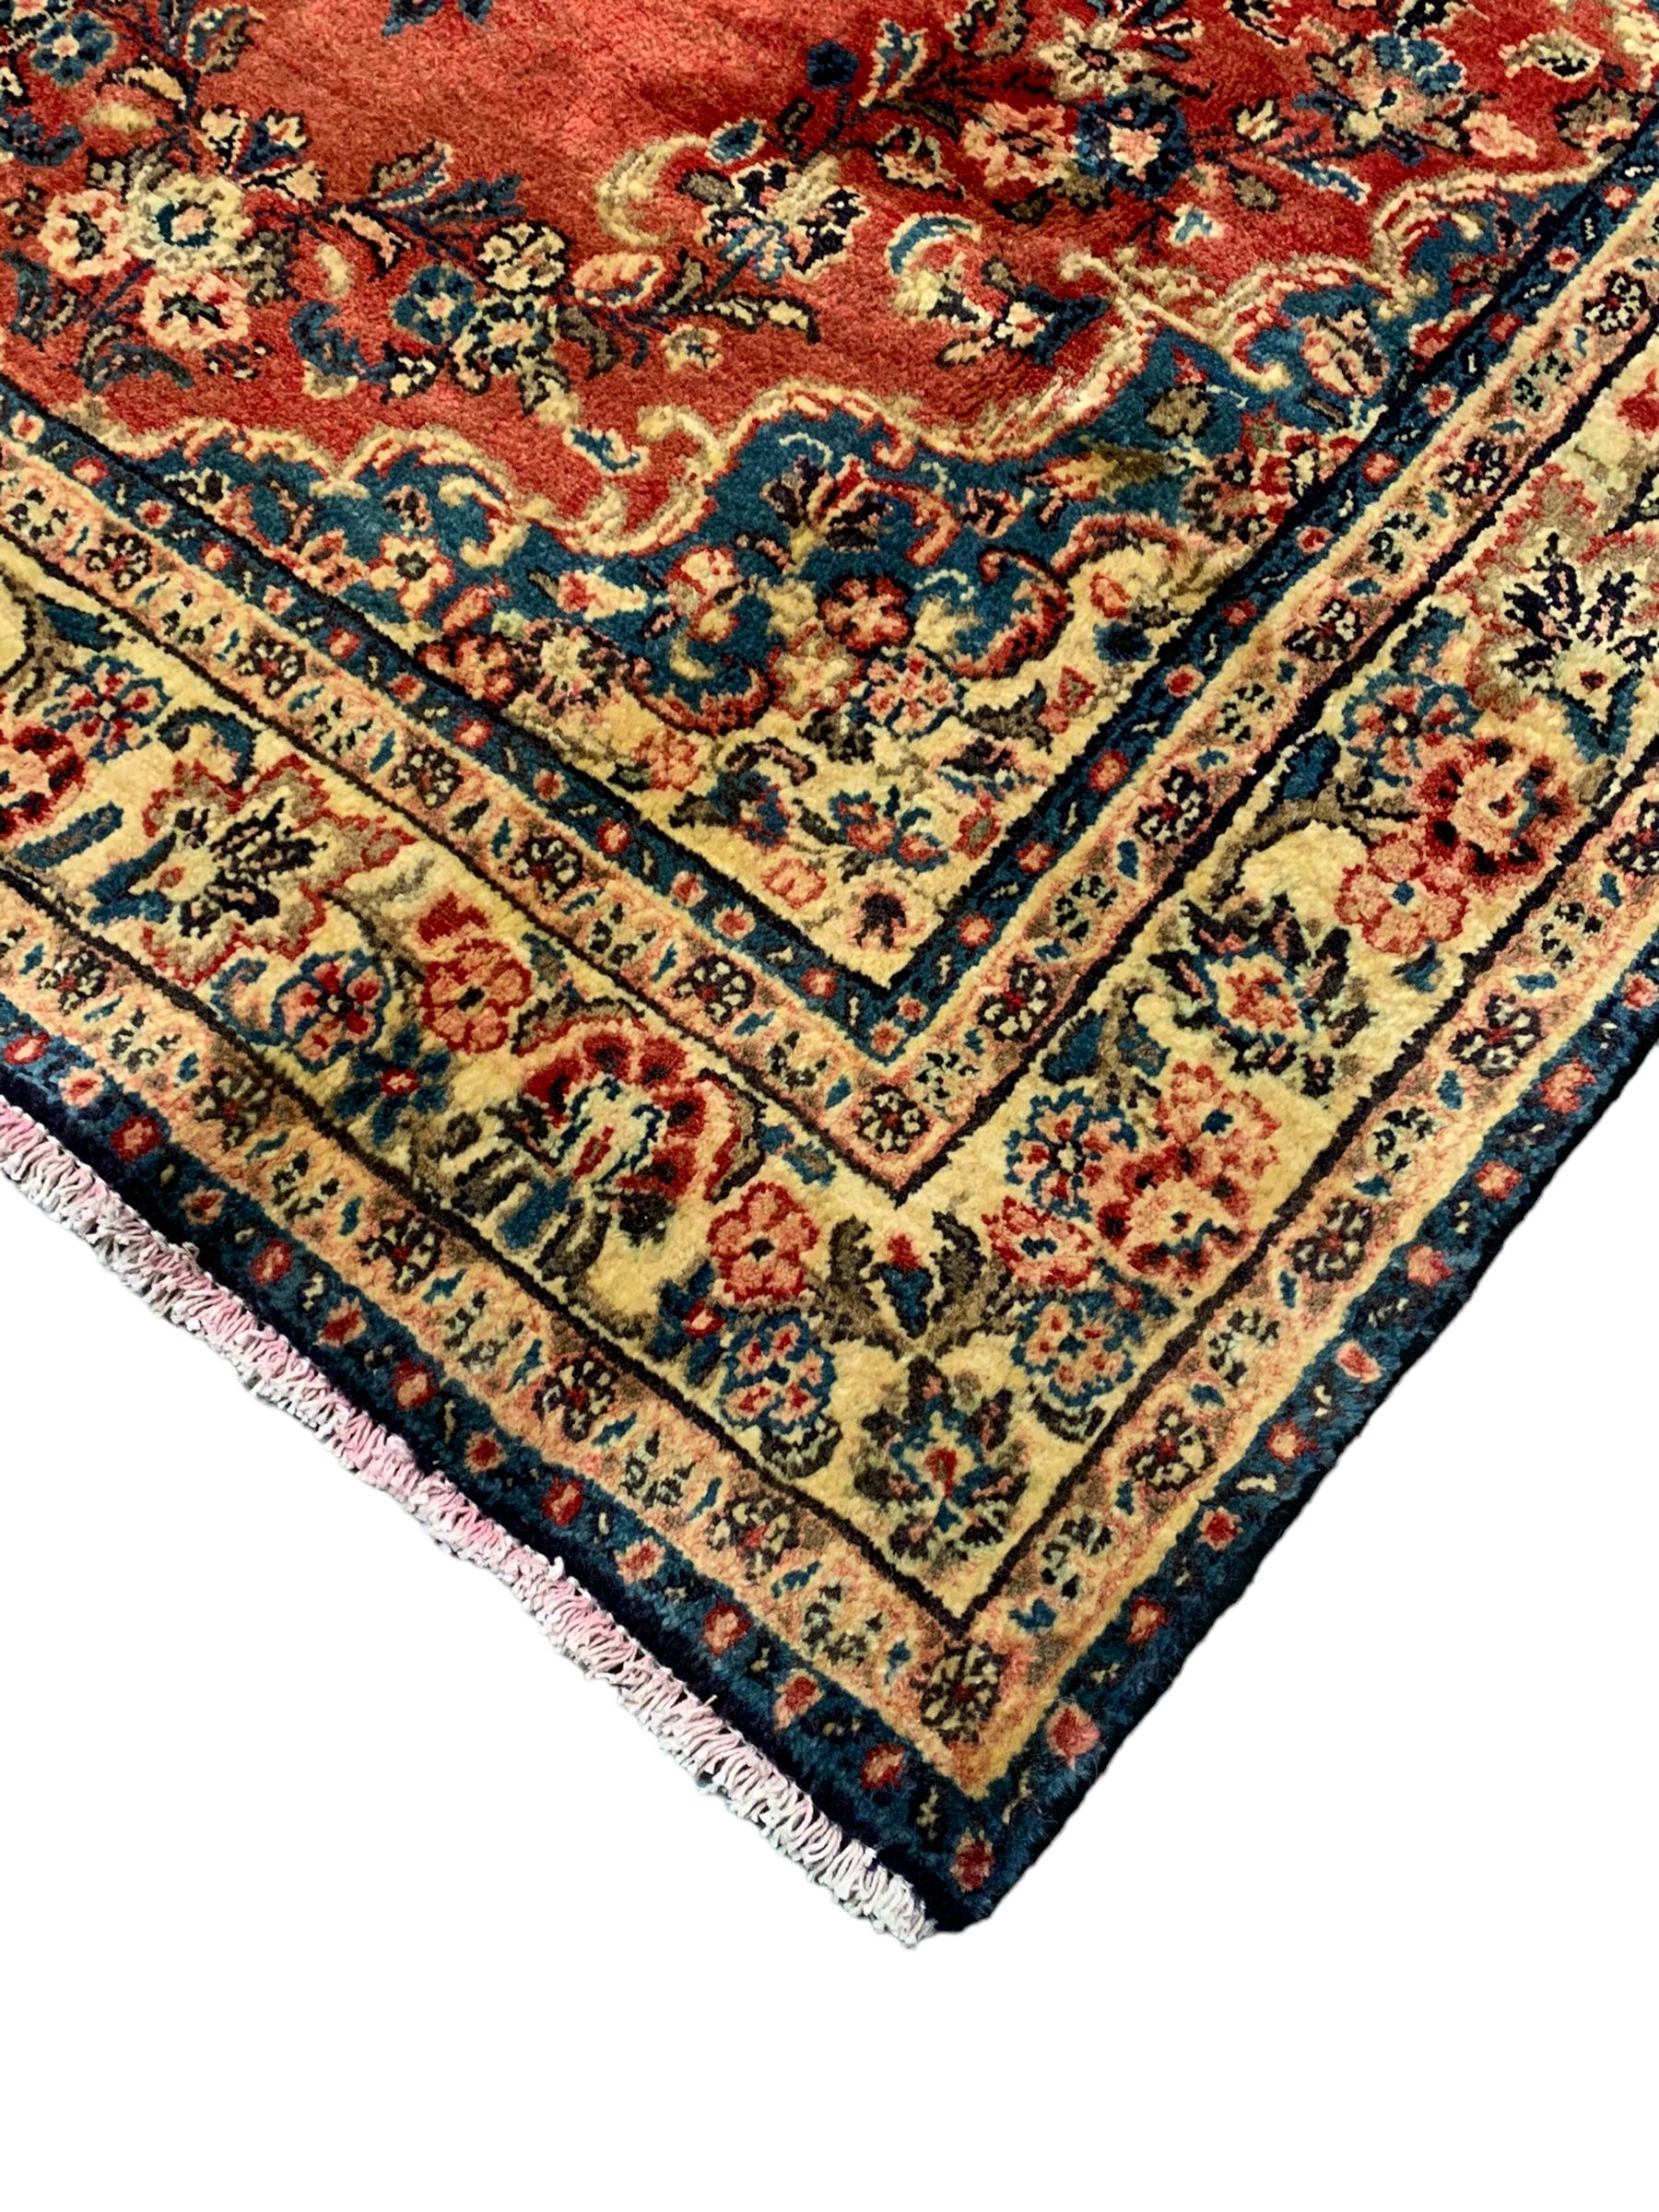 Persian crimson ground rug - Image 5 of 8